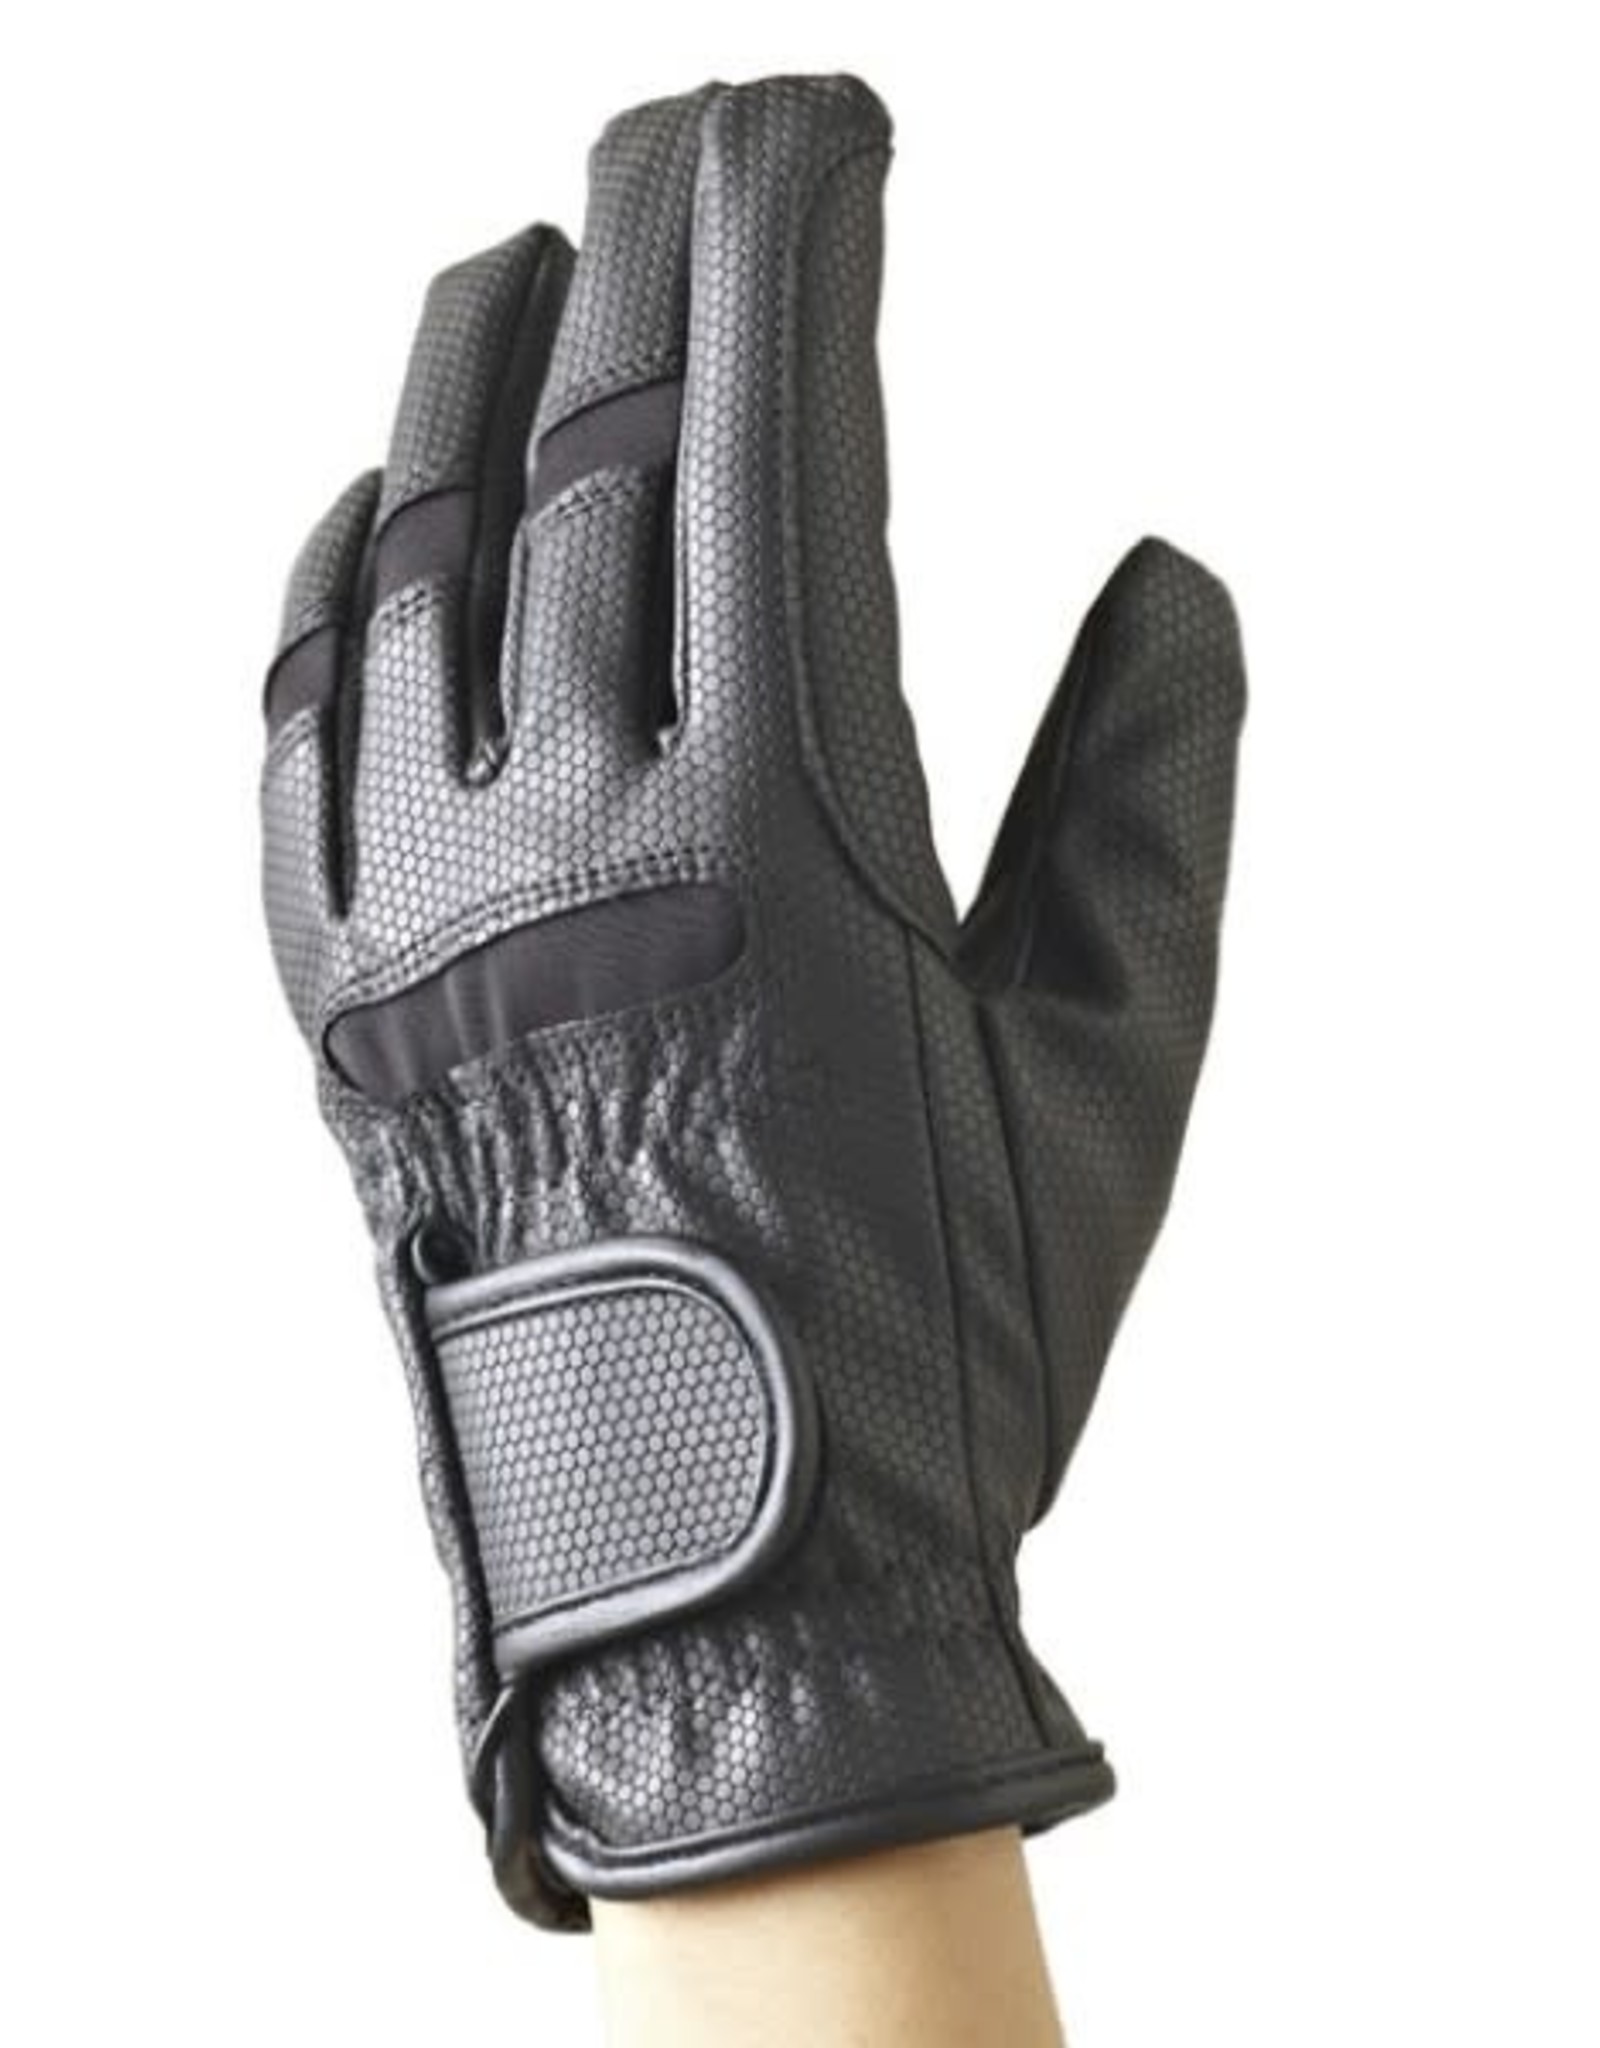 Ovation Comfortex Thinsulate™ Winter Glove